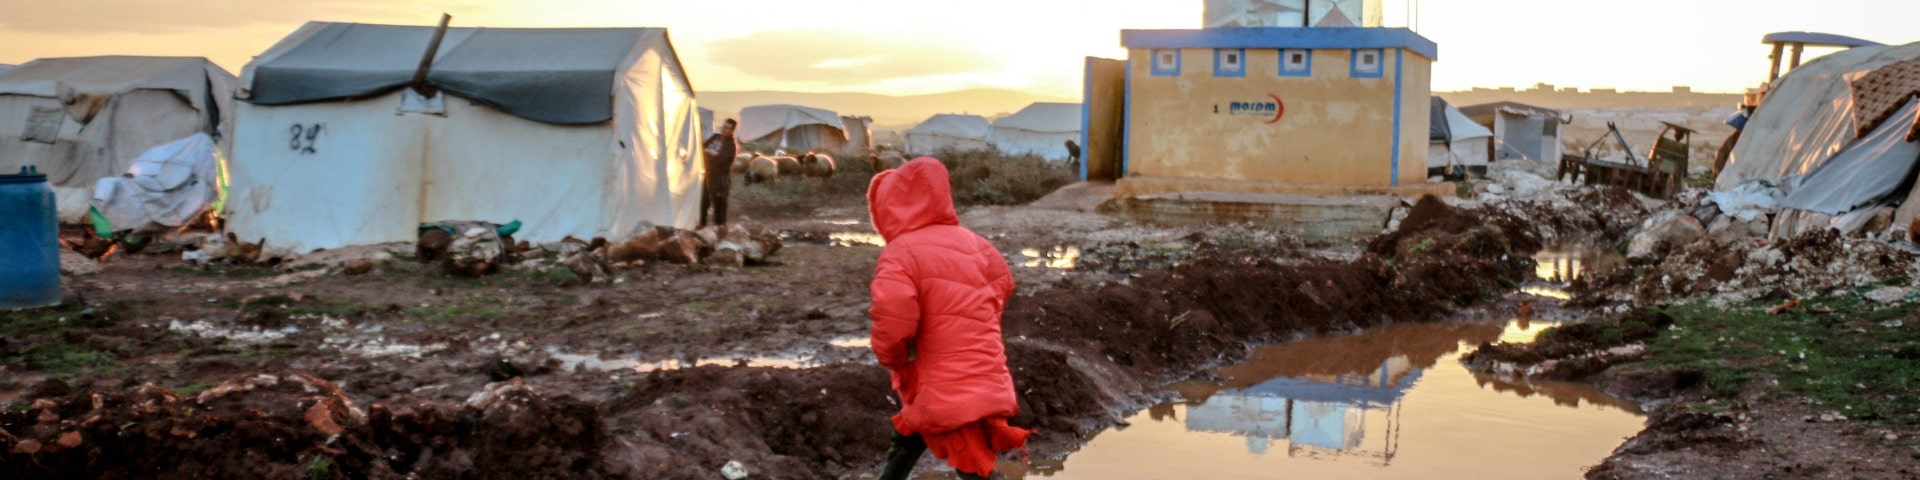 Child walking through a war-torn area